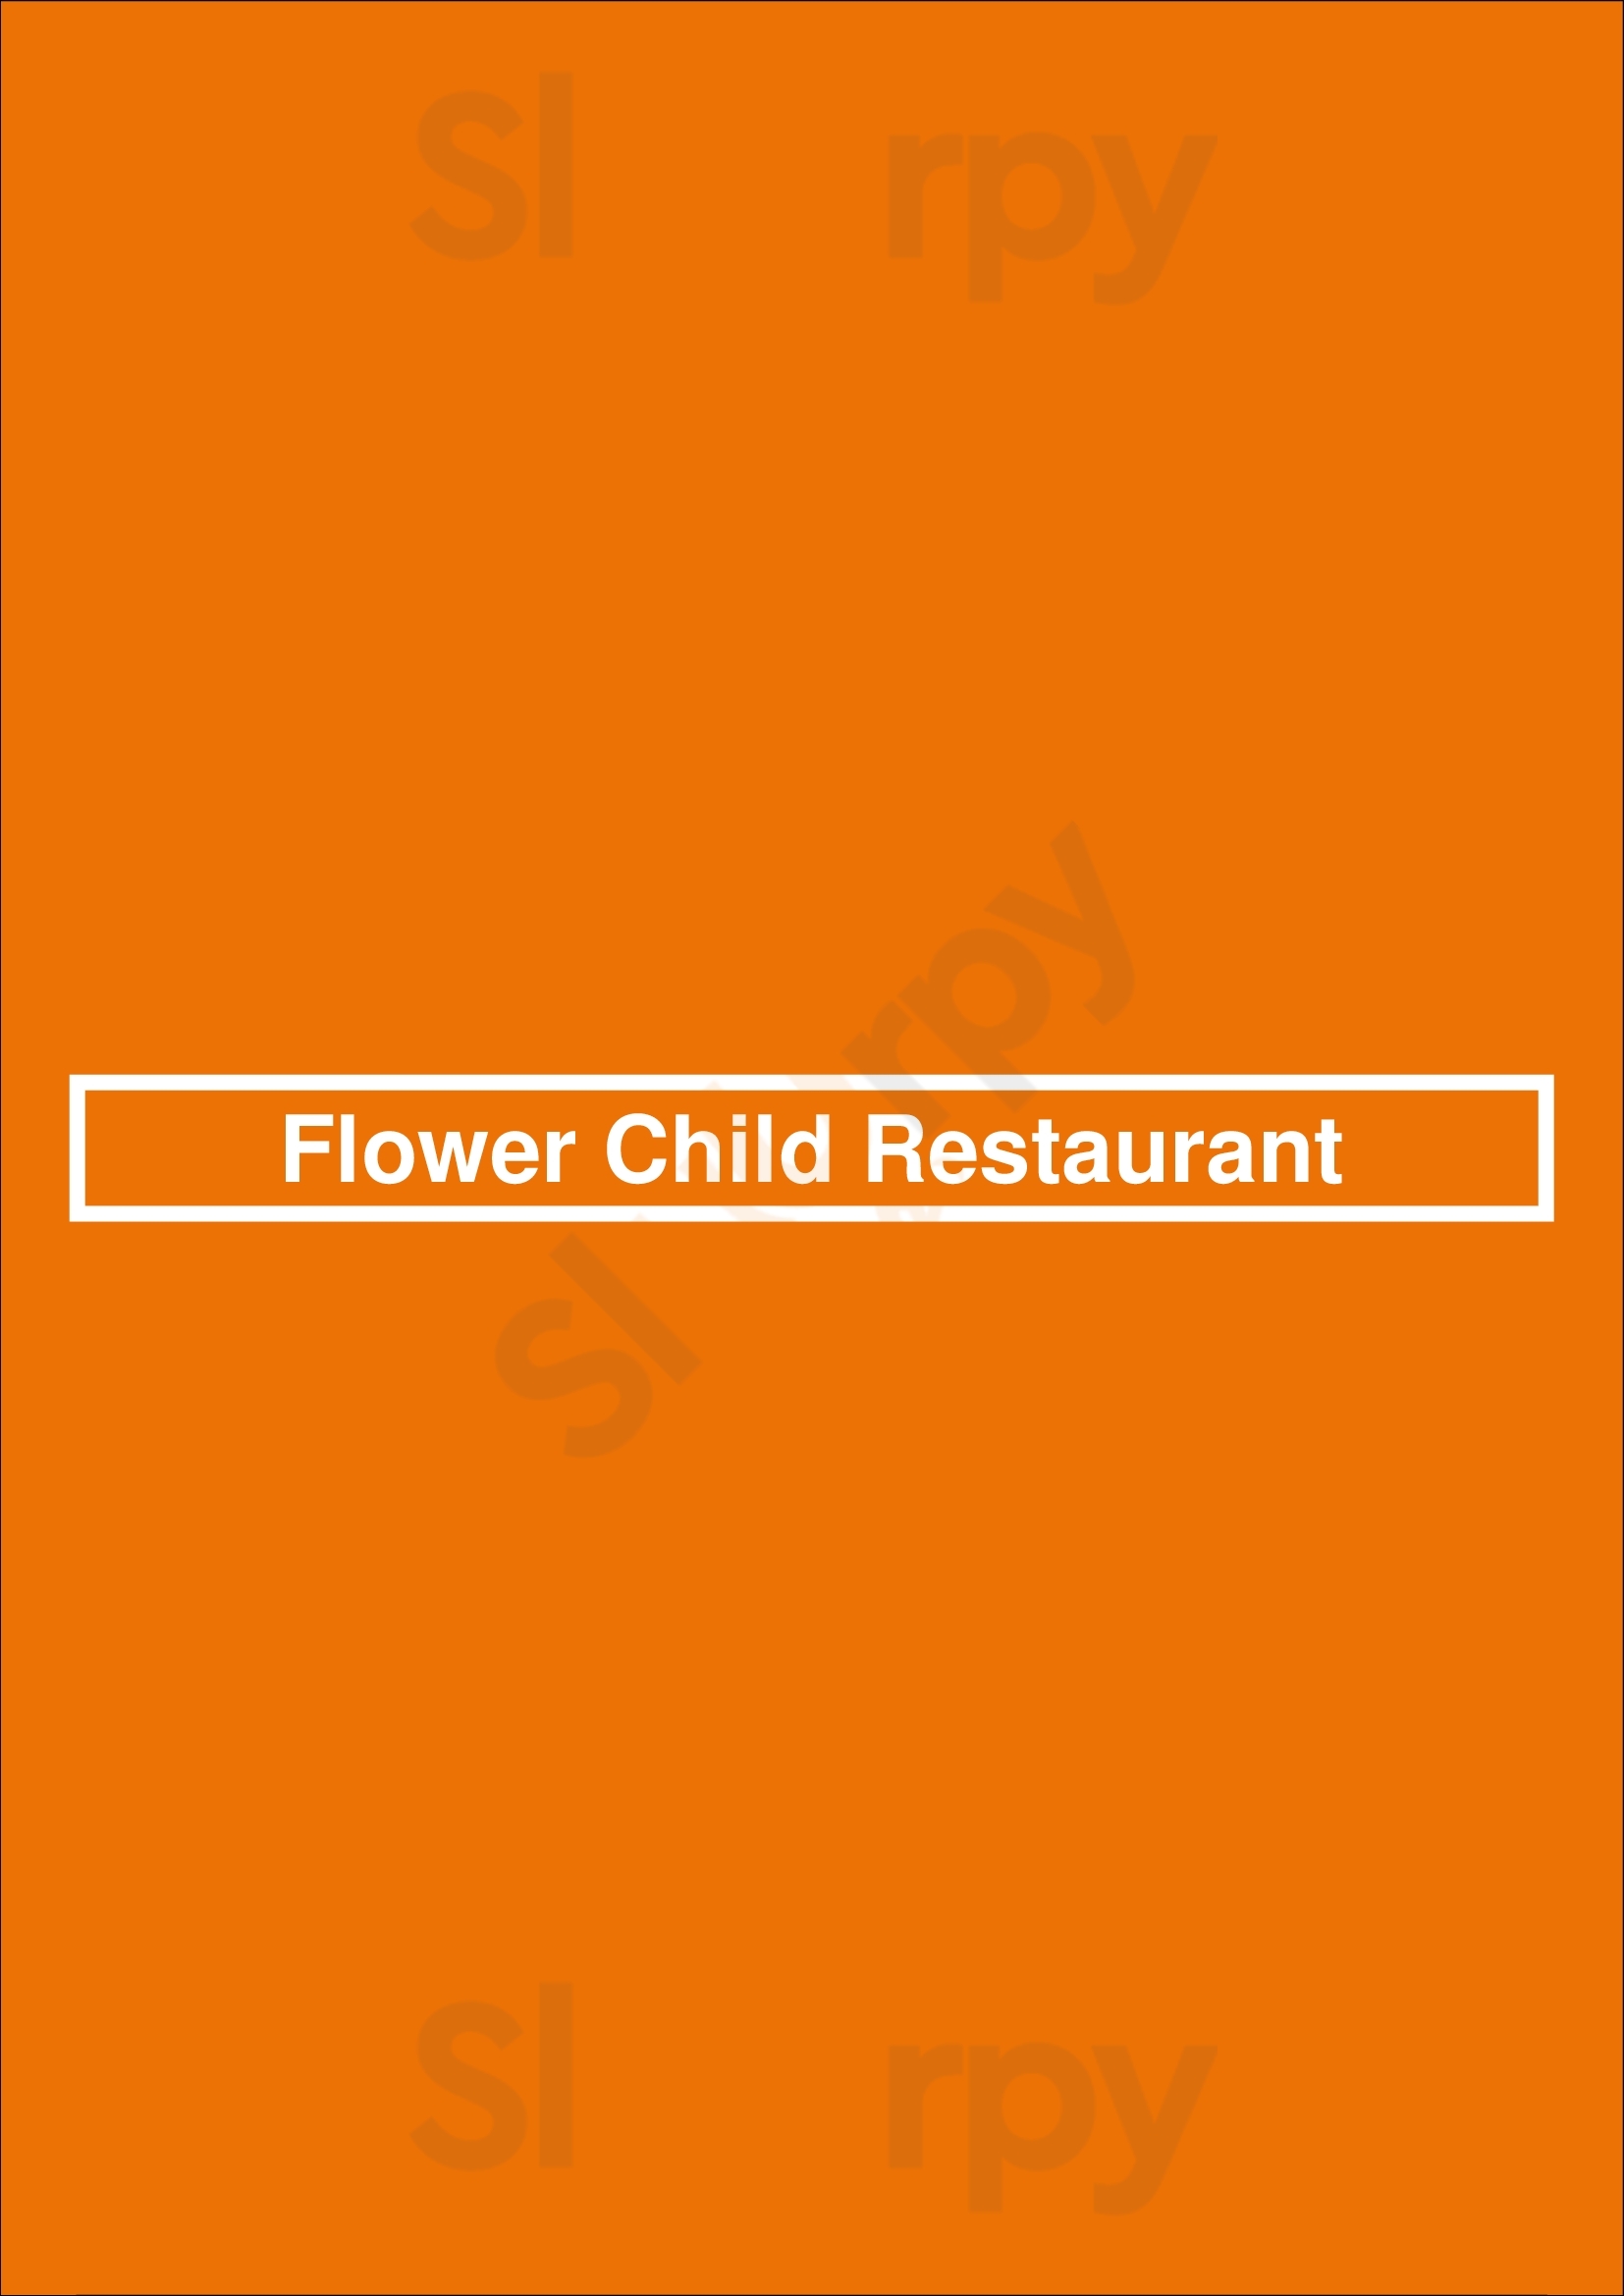 Flower Child Houston Menu - 1